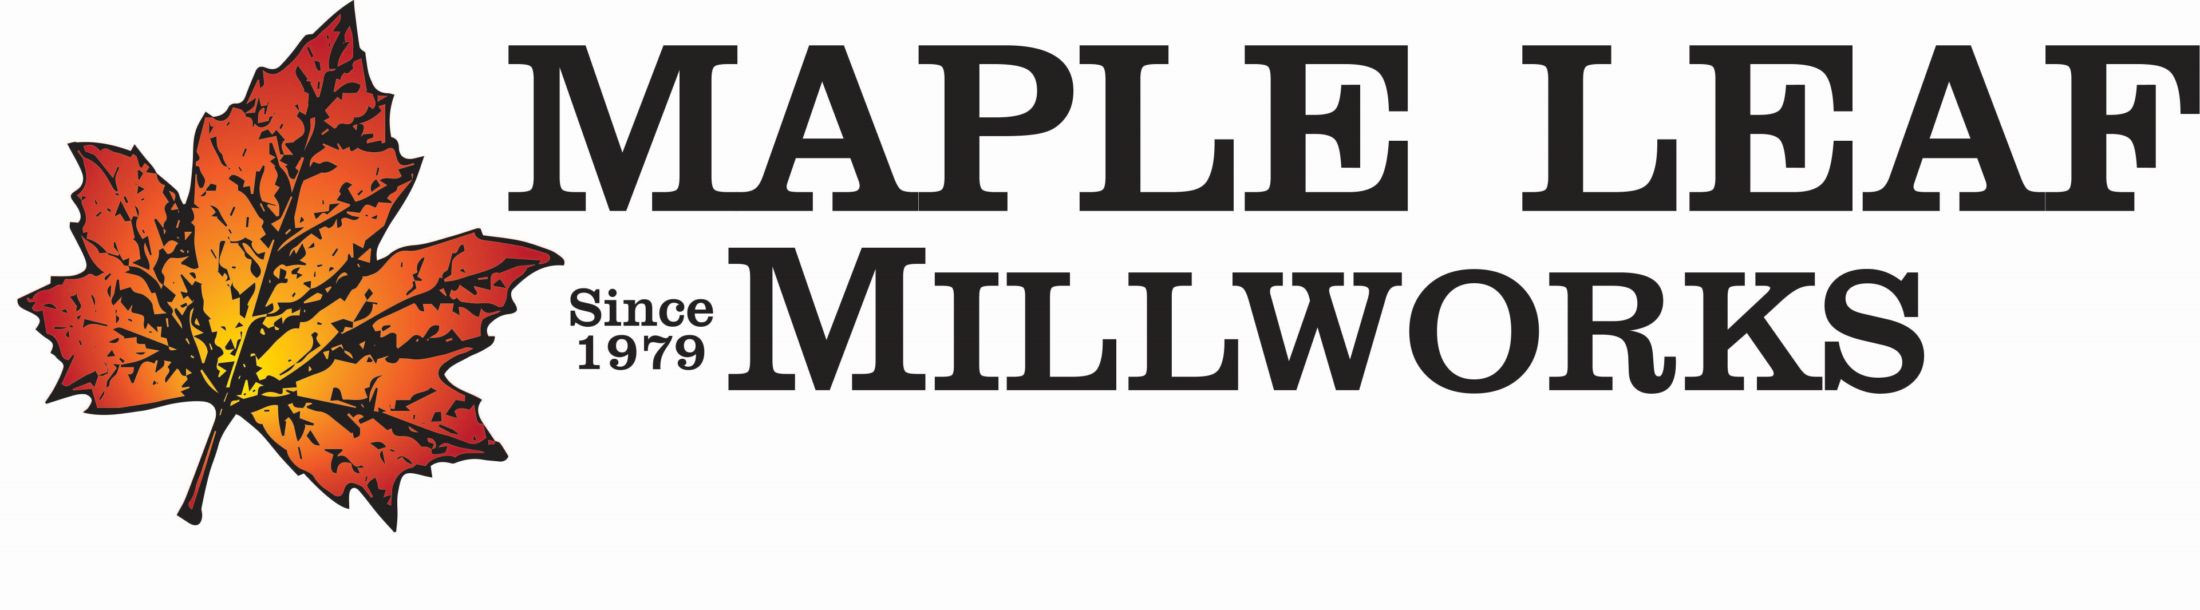 Maple Leaf Millworks